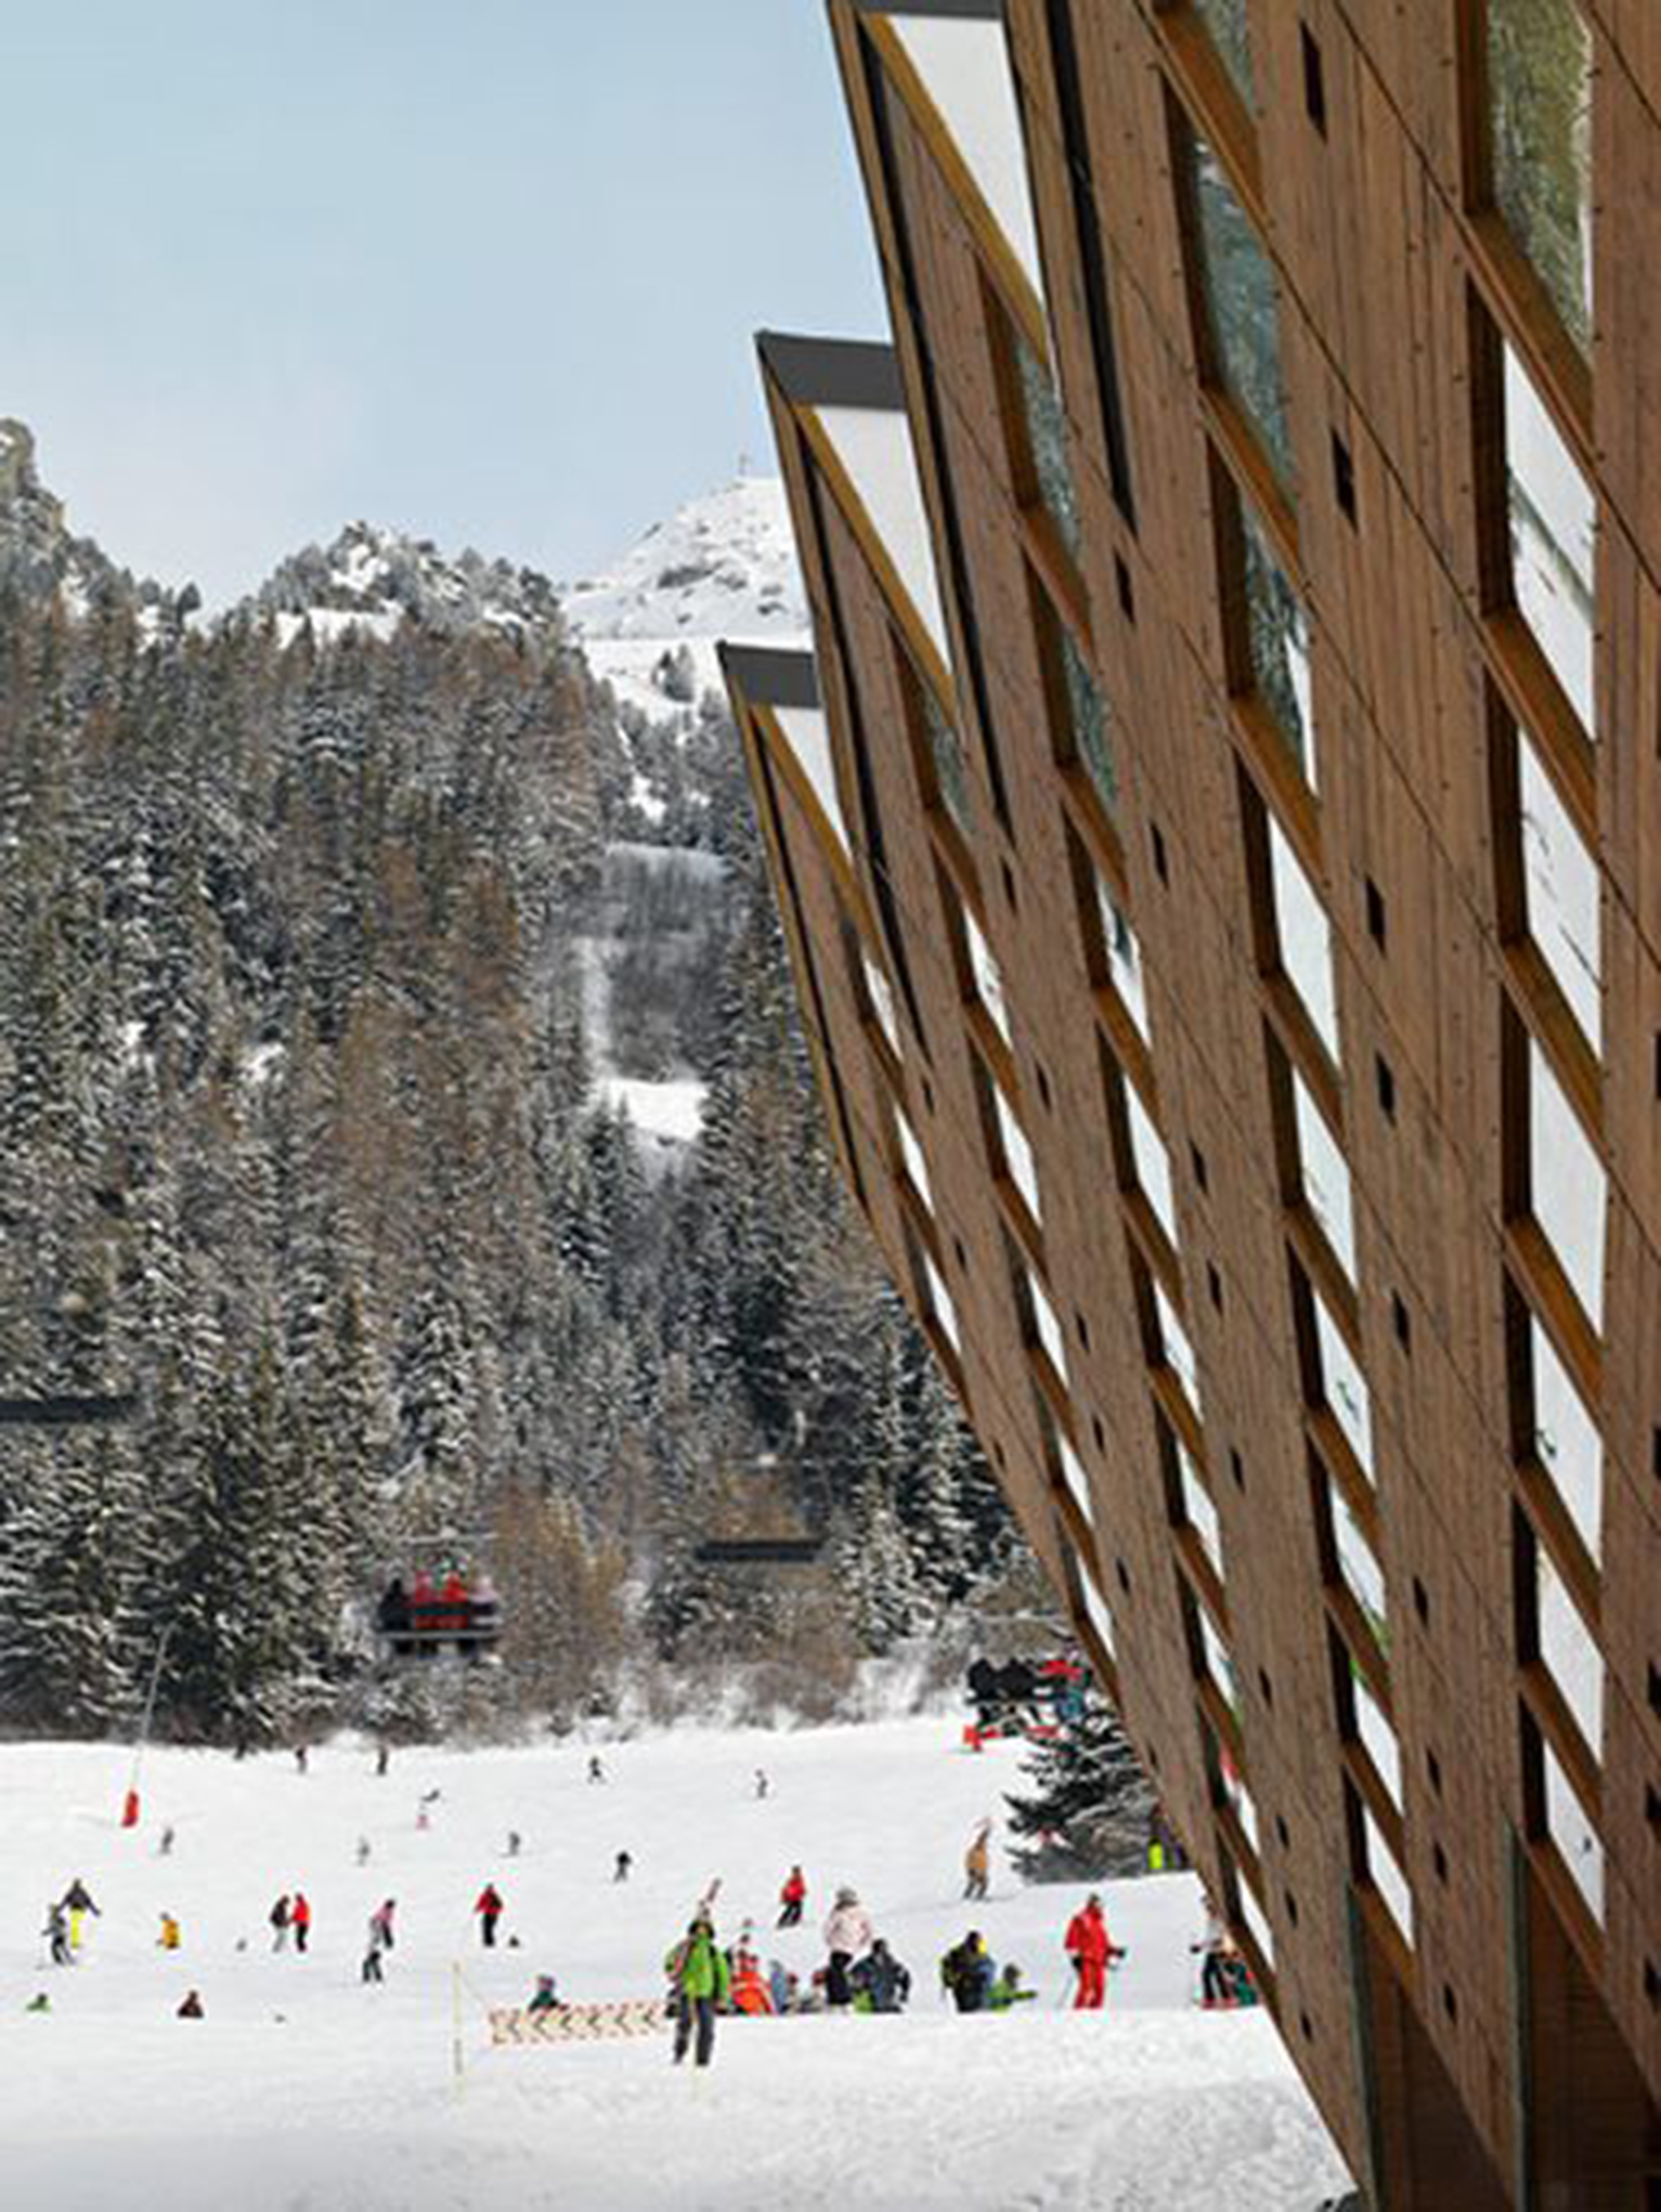 Hidden Architecture » Les Arcs Ski Resort - Hidden Architecture